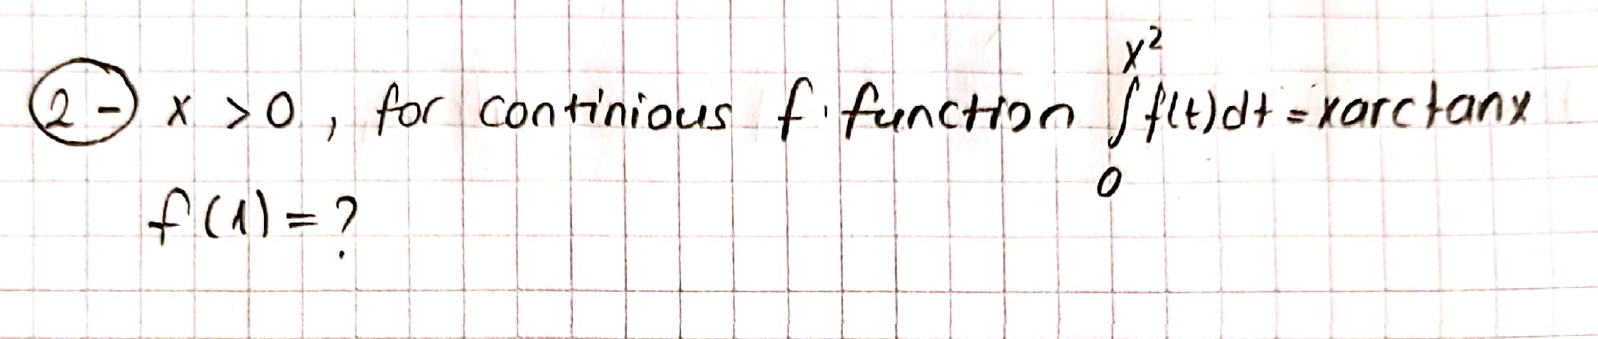 X >0, for continious f functHon Sft)dt = xarctanx
fla)=?
